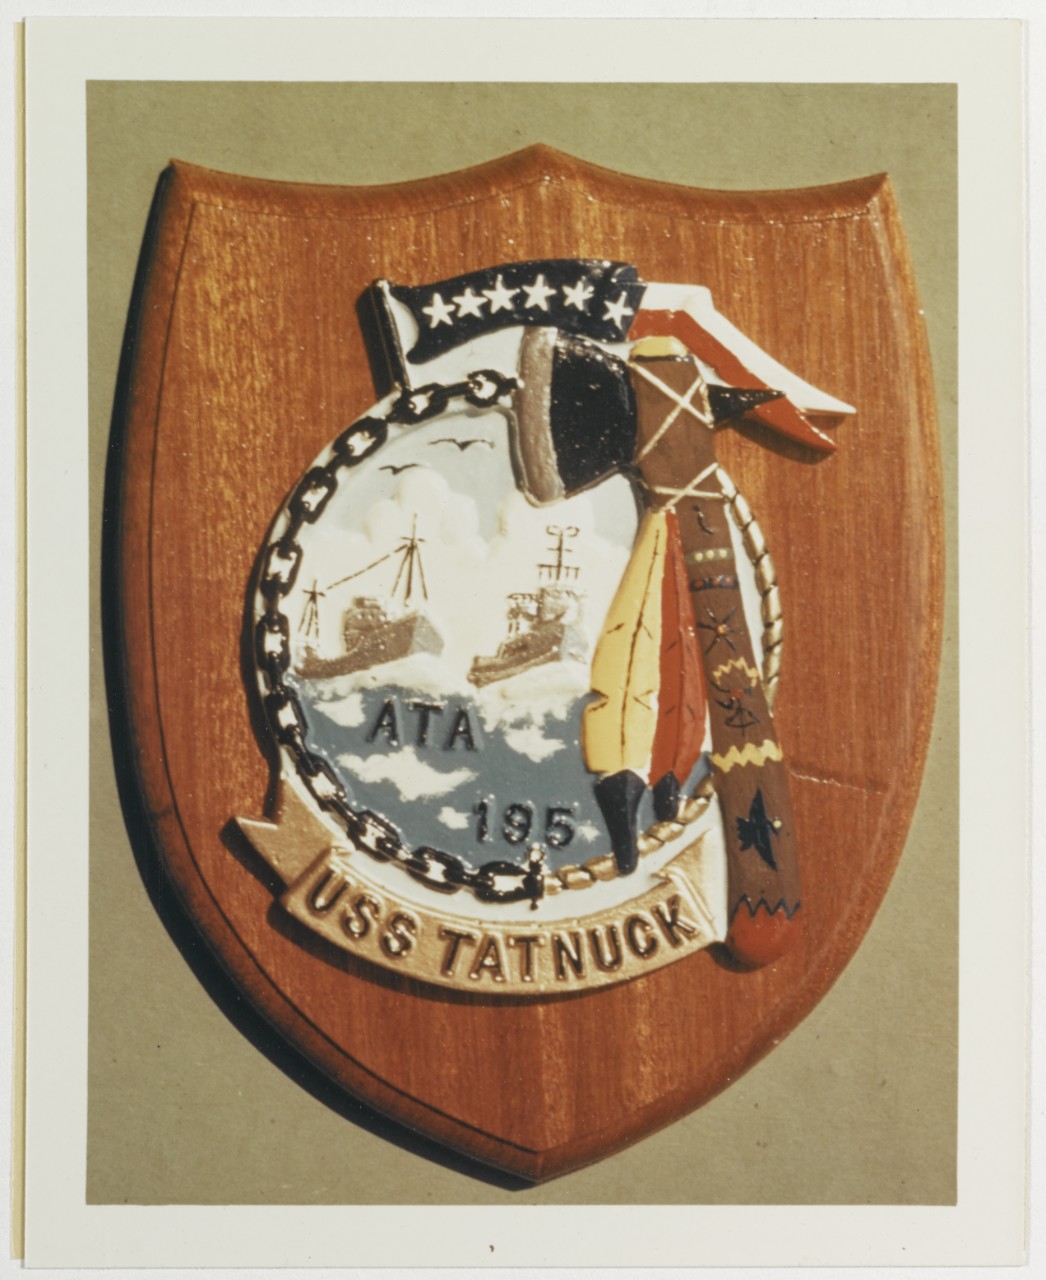 Insignia: USS TATNUCK (ATA - 196)